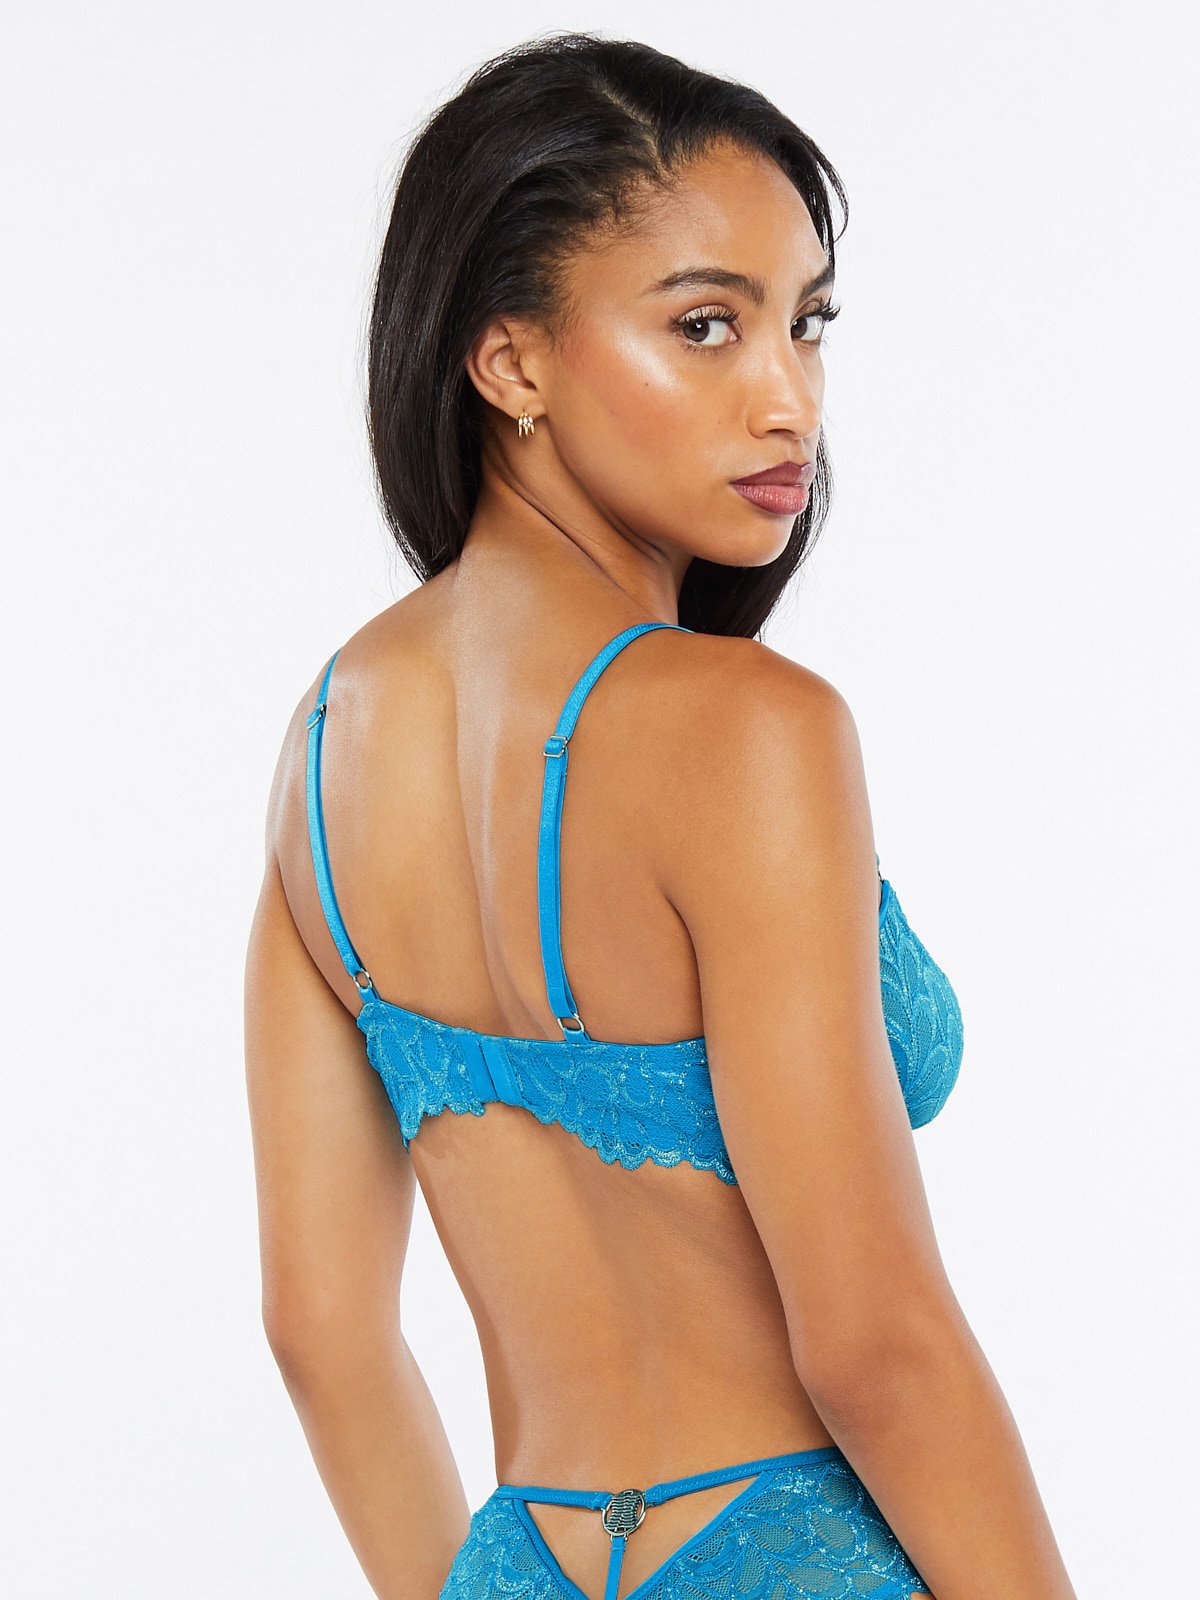 MELENECA Balconette Underwire Sexy Lace Bra for Women Blue 42D 